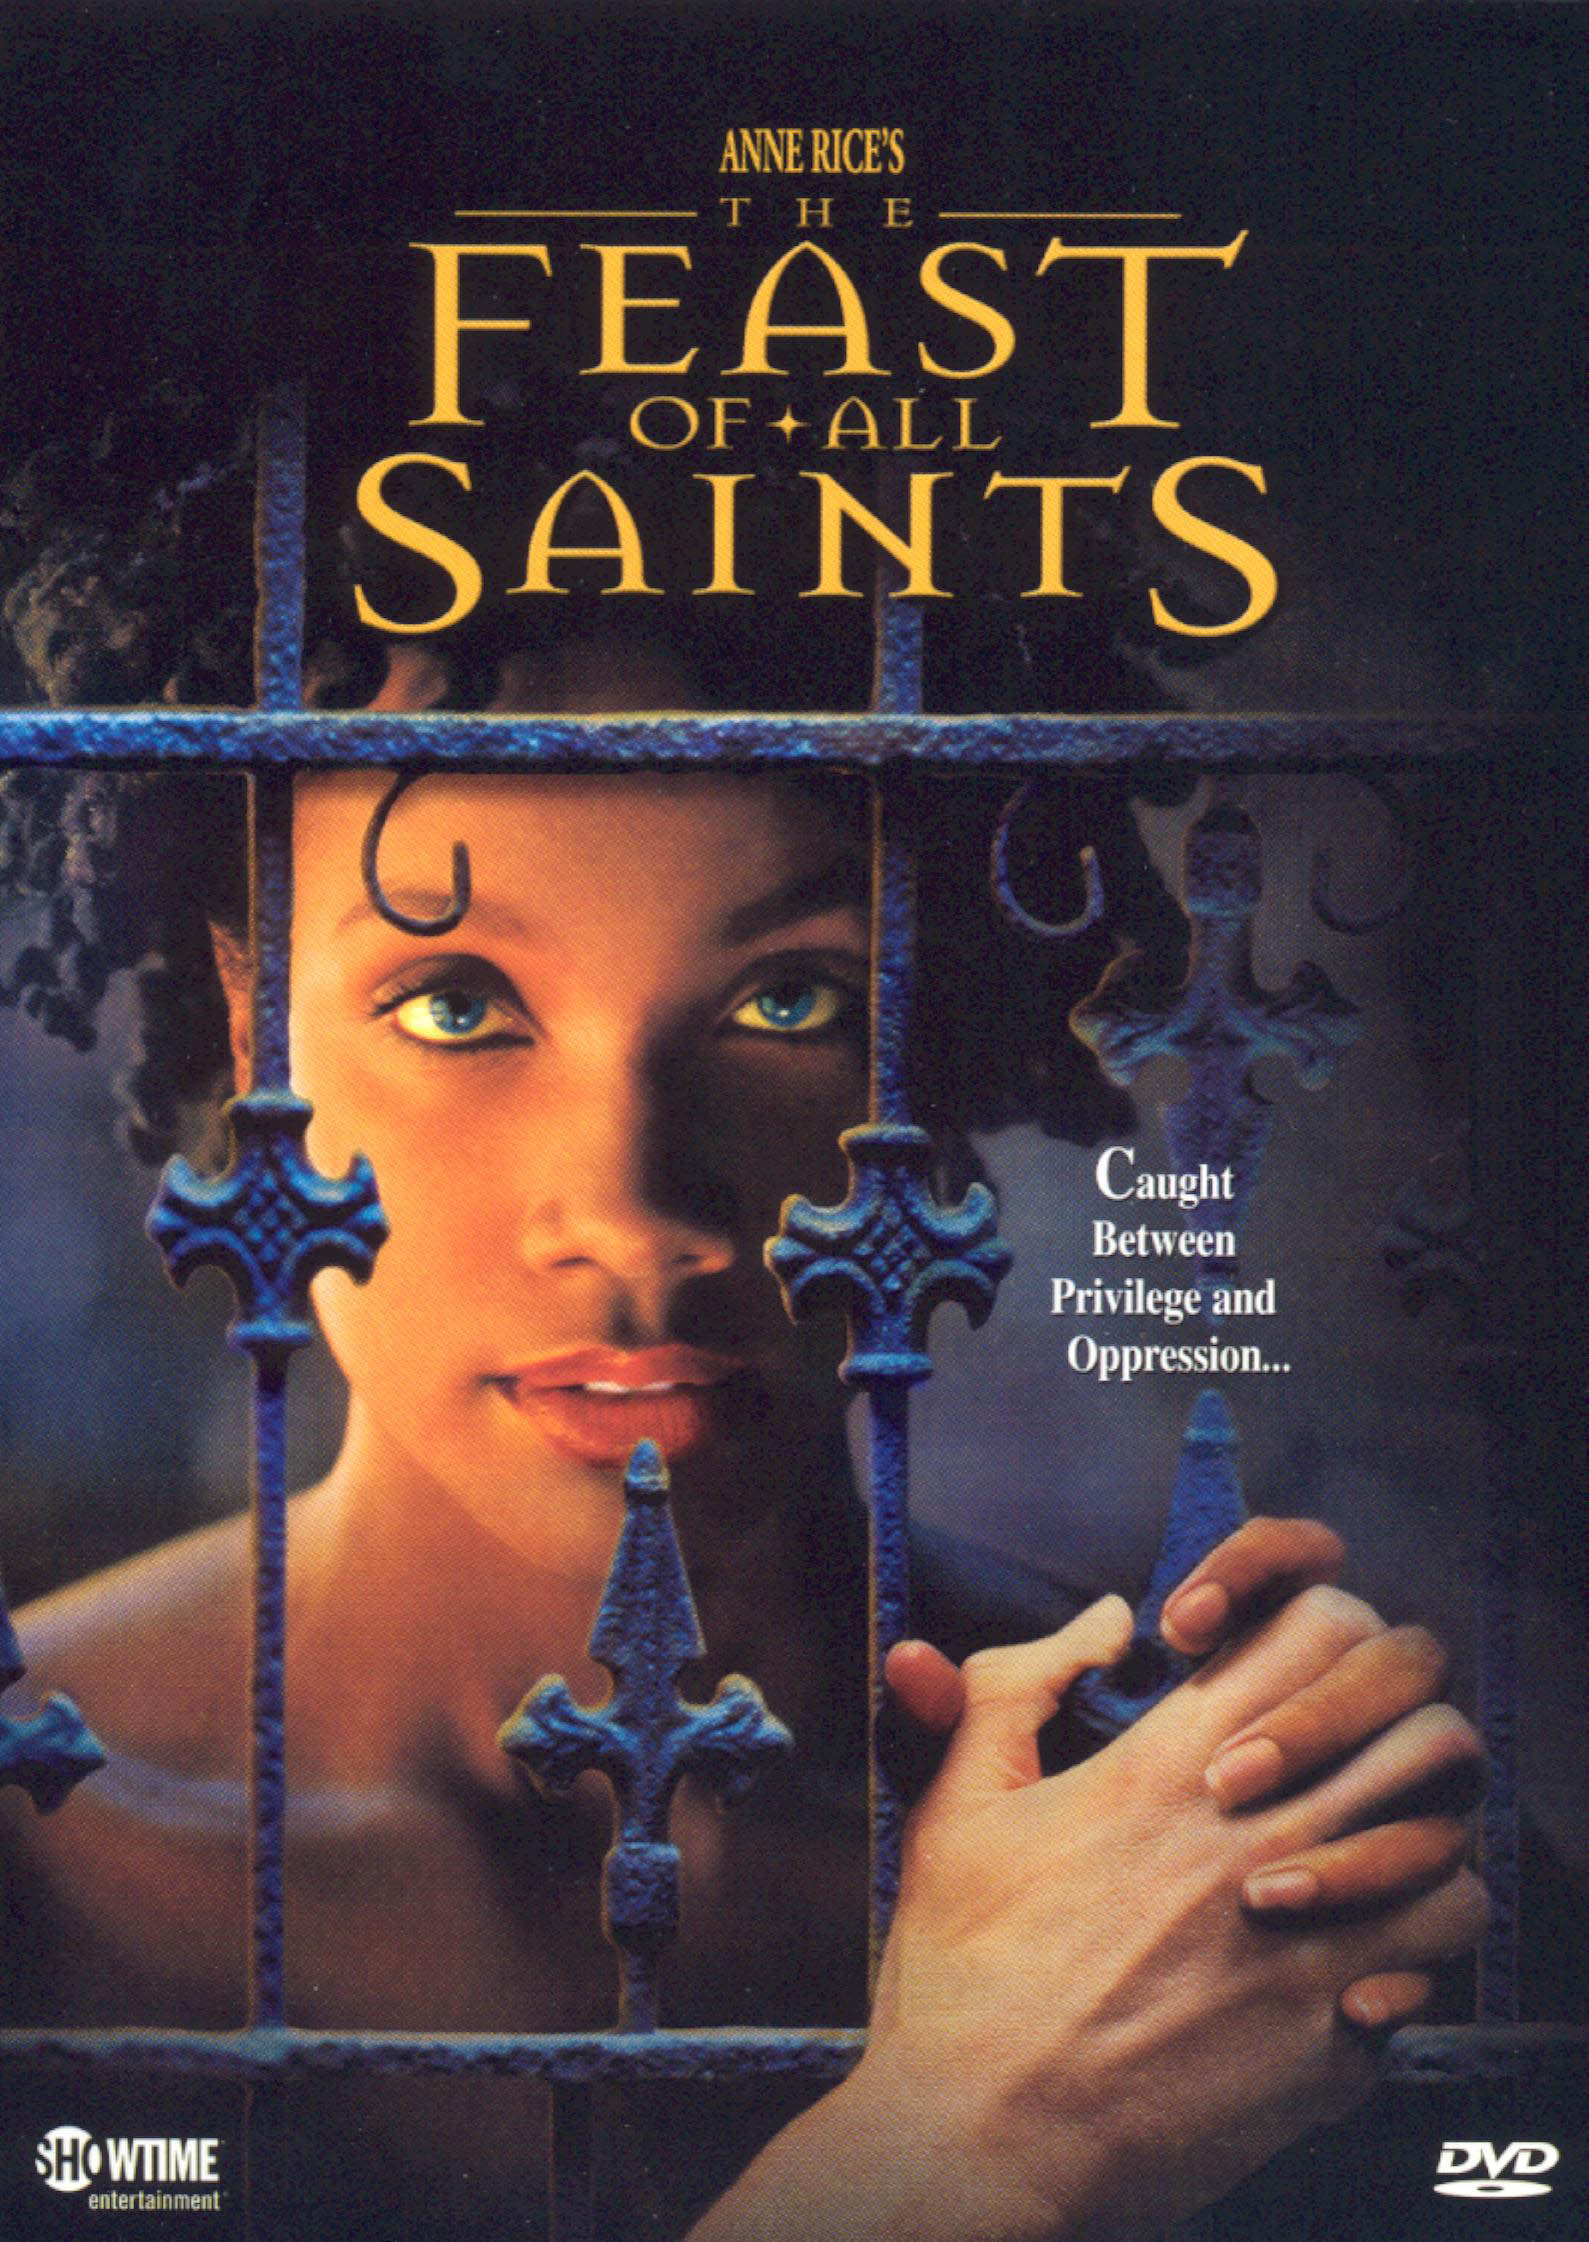 The Feast of All Saints (2001) Screenshot 3 